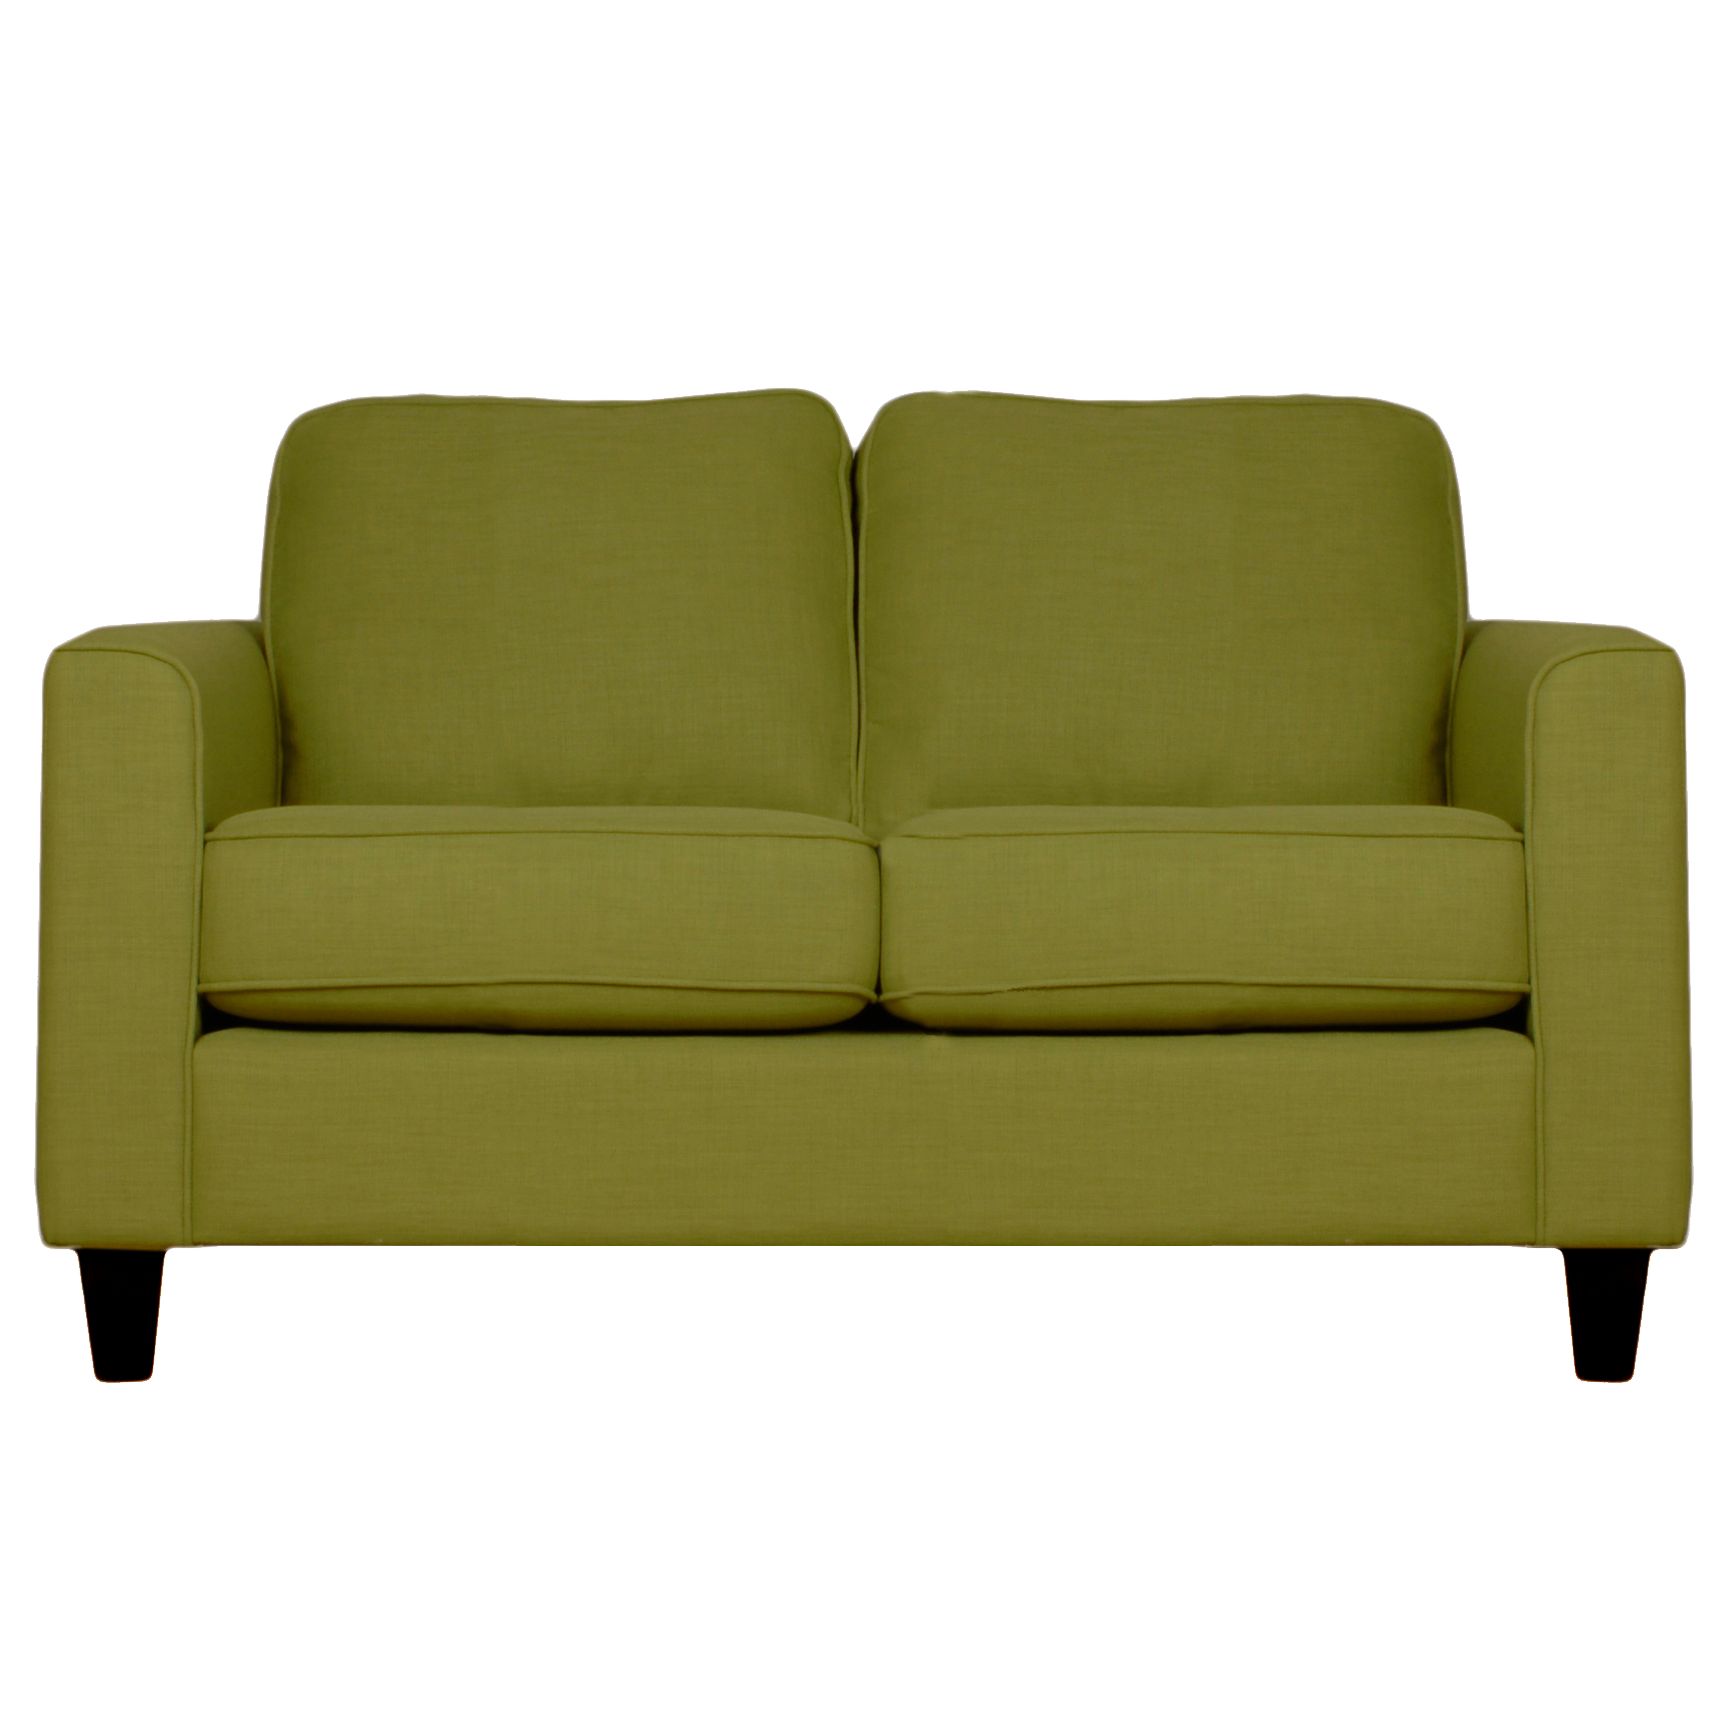 John Lewis Portia Small Sofa, Olive